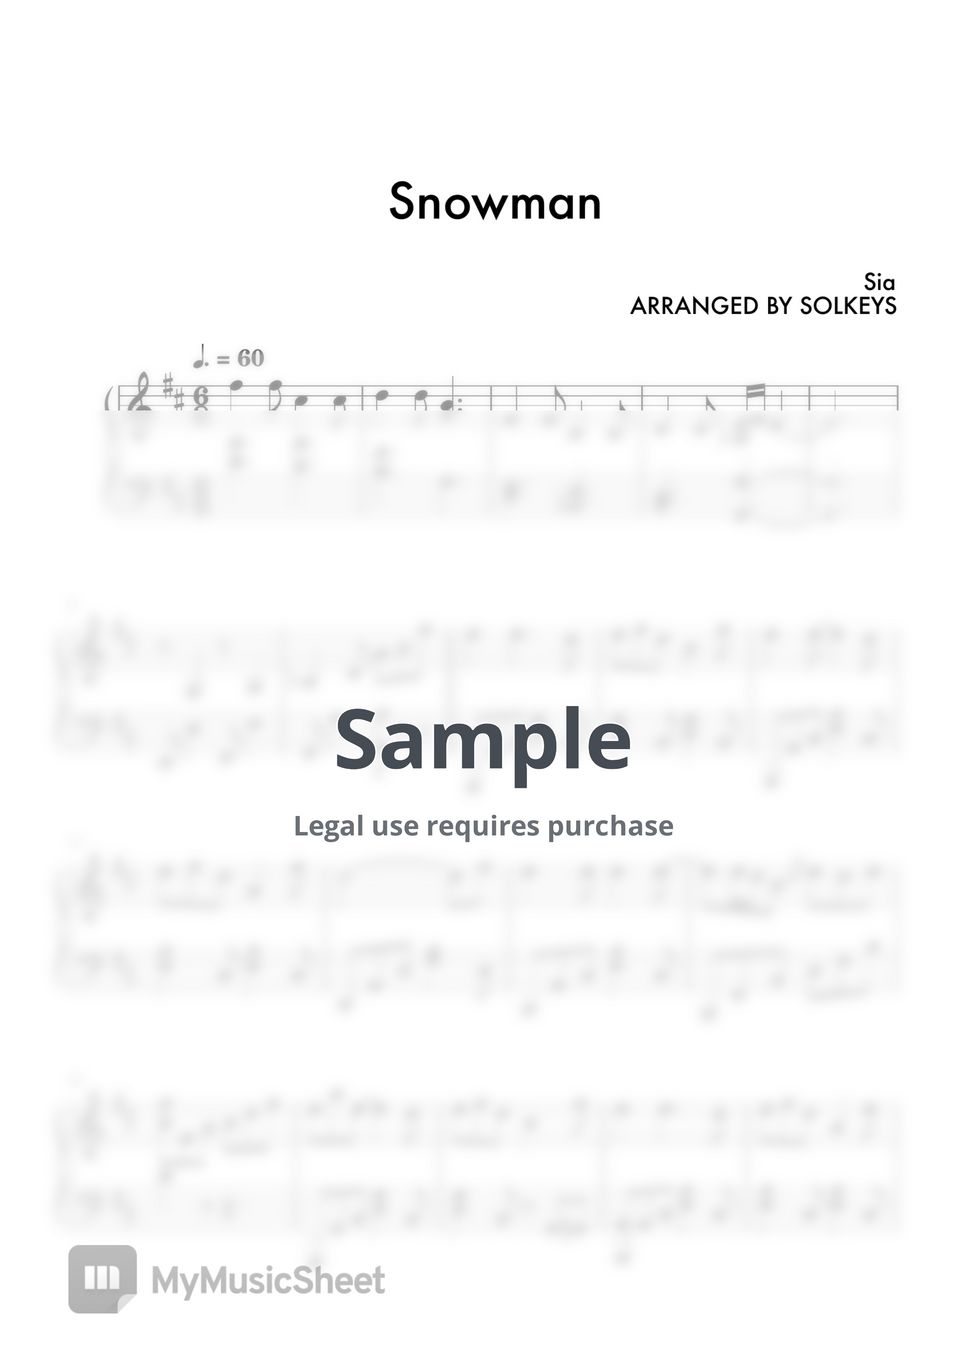 Sia - Snowman by SolKeys